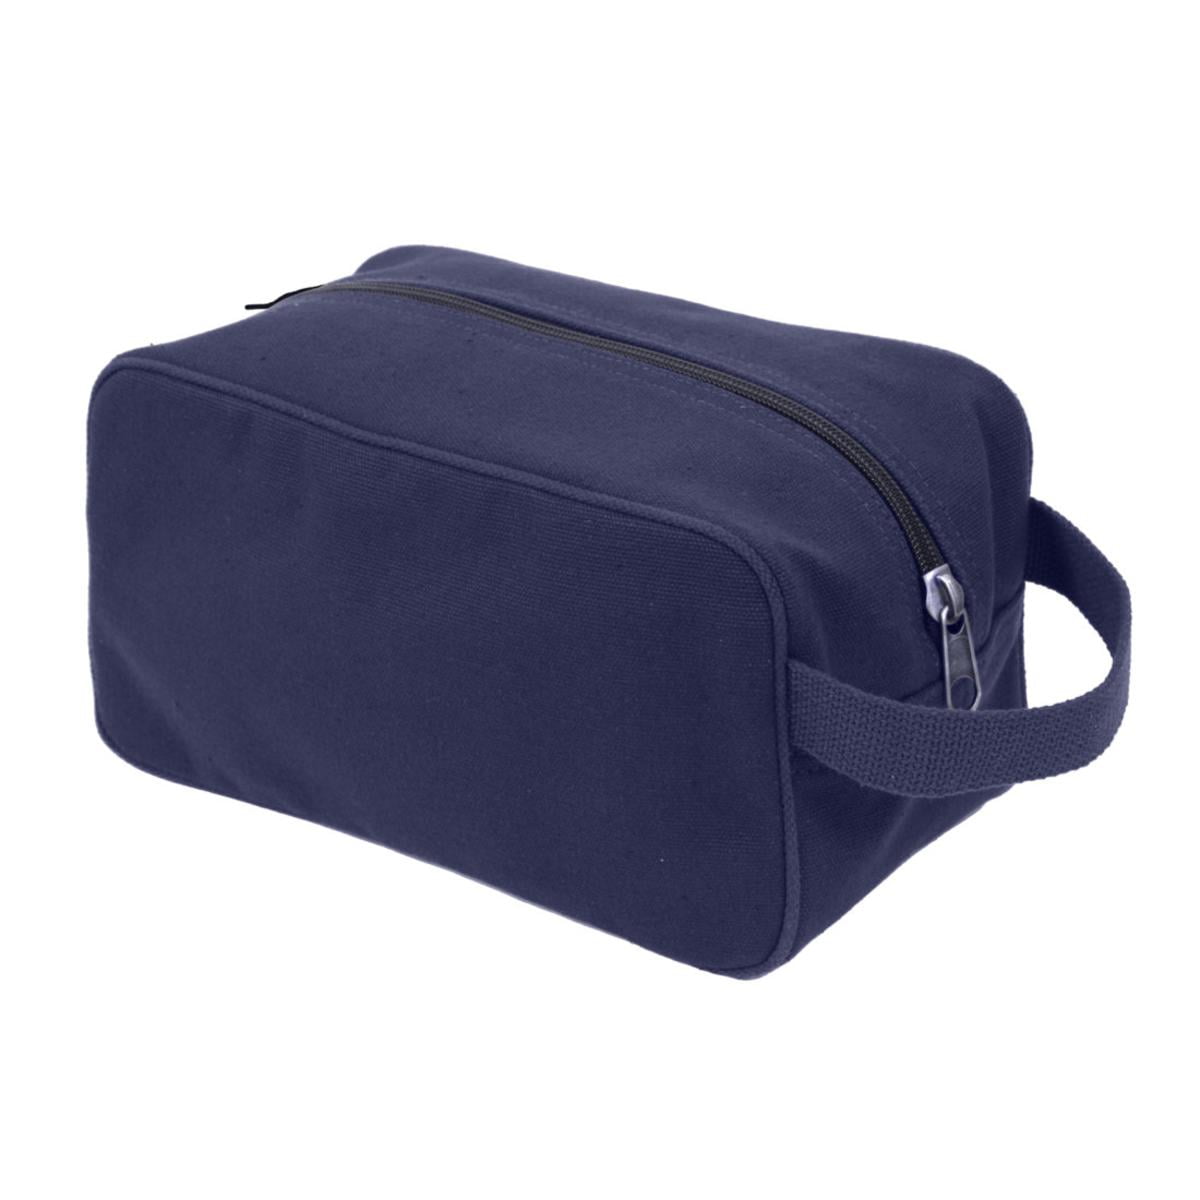 Rothco Canvas Travel Kit, Toiletry Bag, Navy Blue - Walmart.com